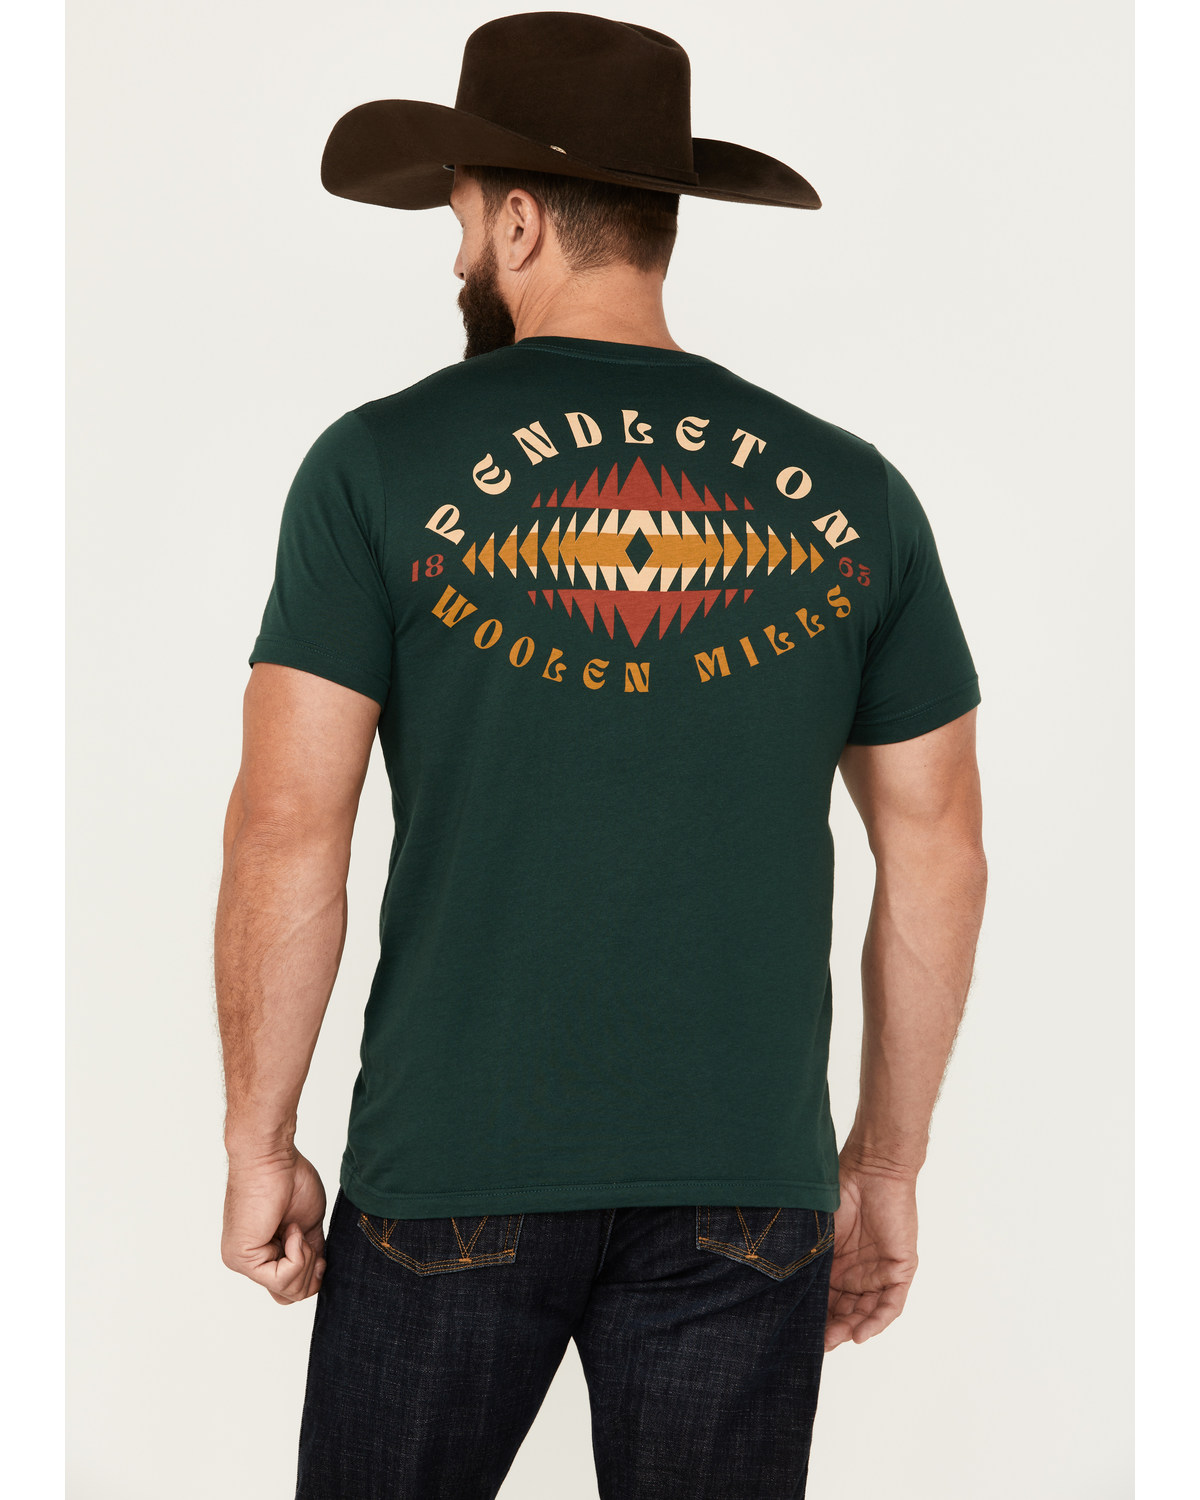 Pendleton Men's Tye River Short Sleeve T-Shirt